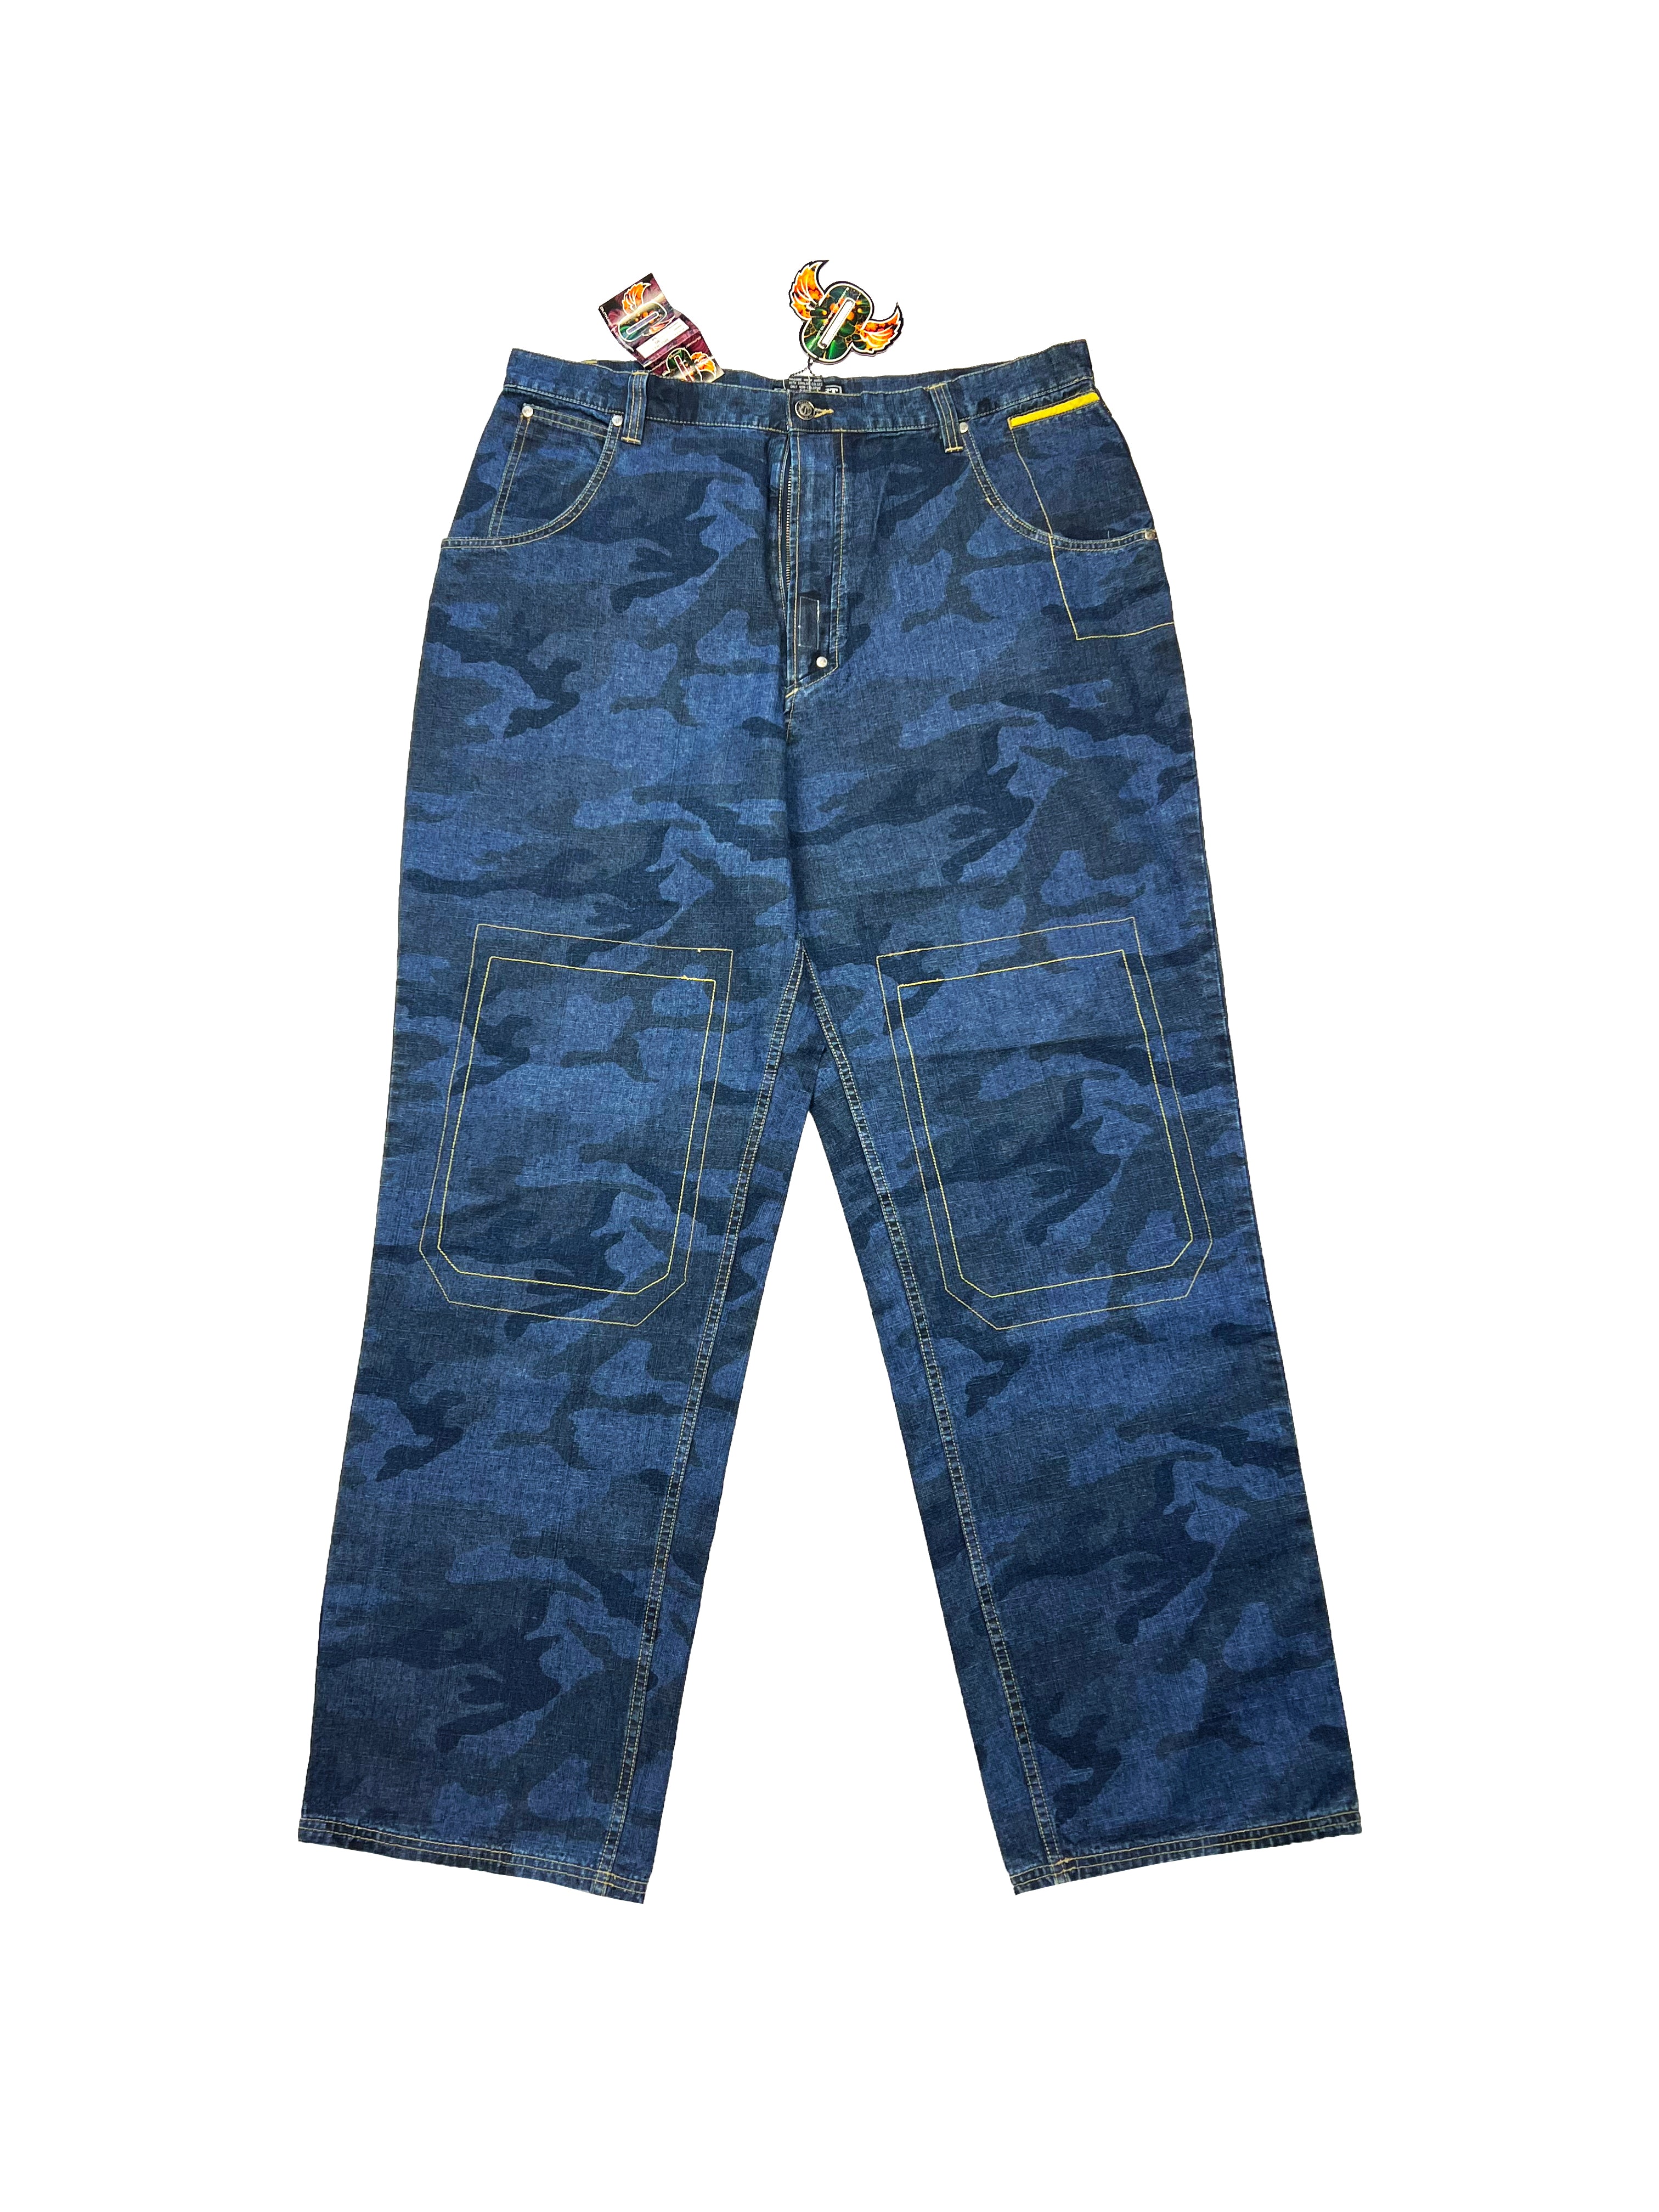 Outkast Blue Camo Jeans BNWT 90's